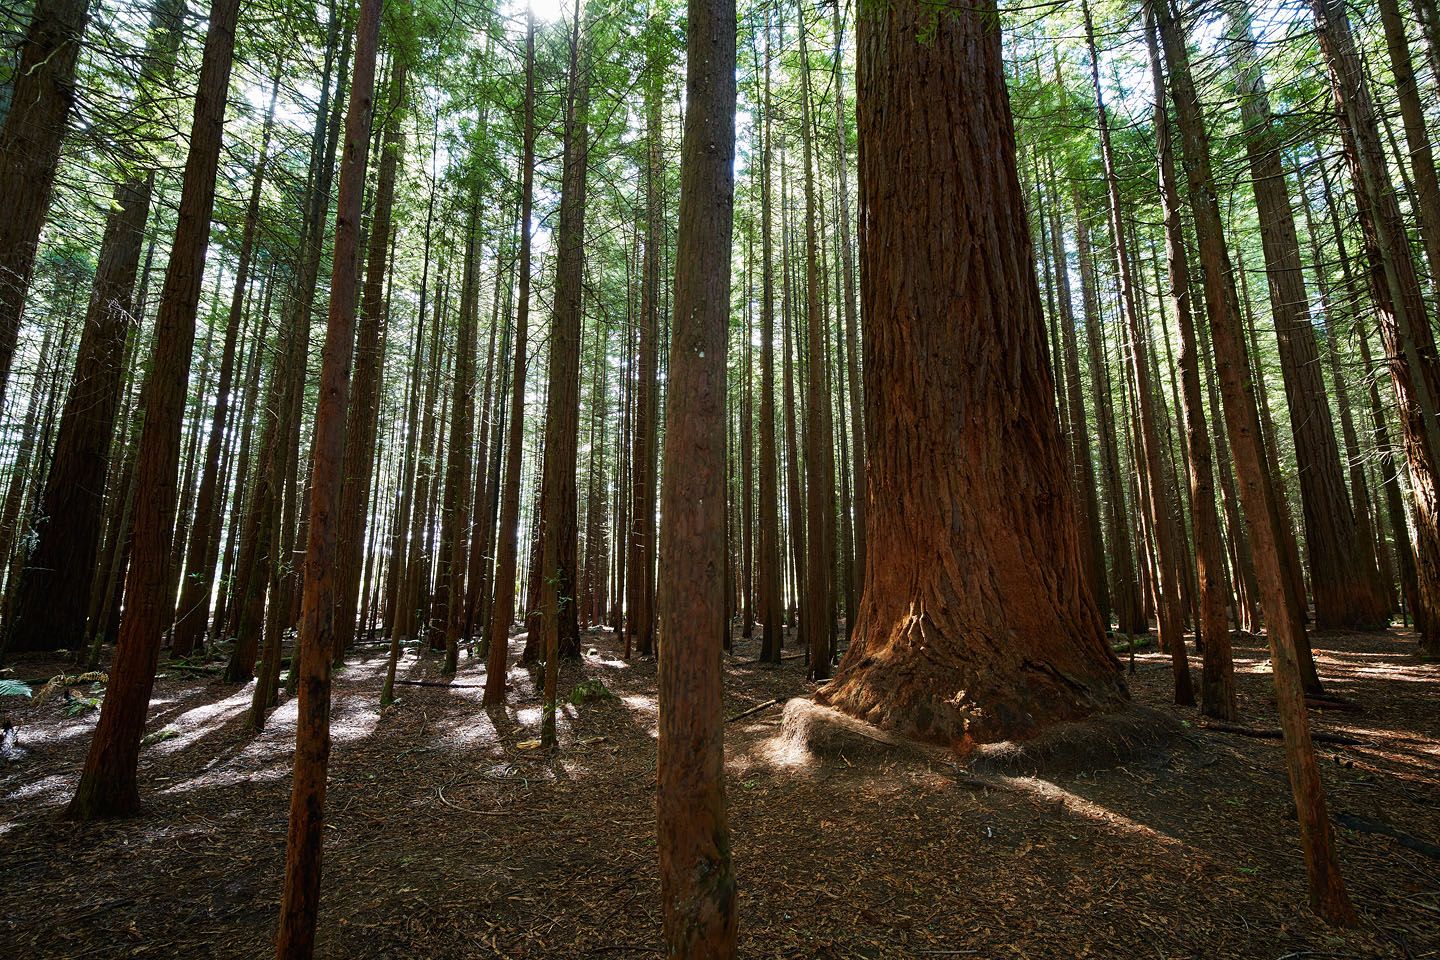 The Redwood Trees